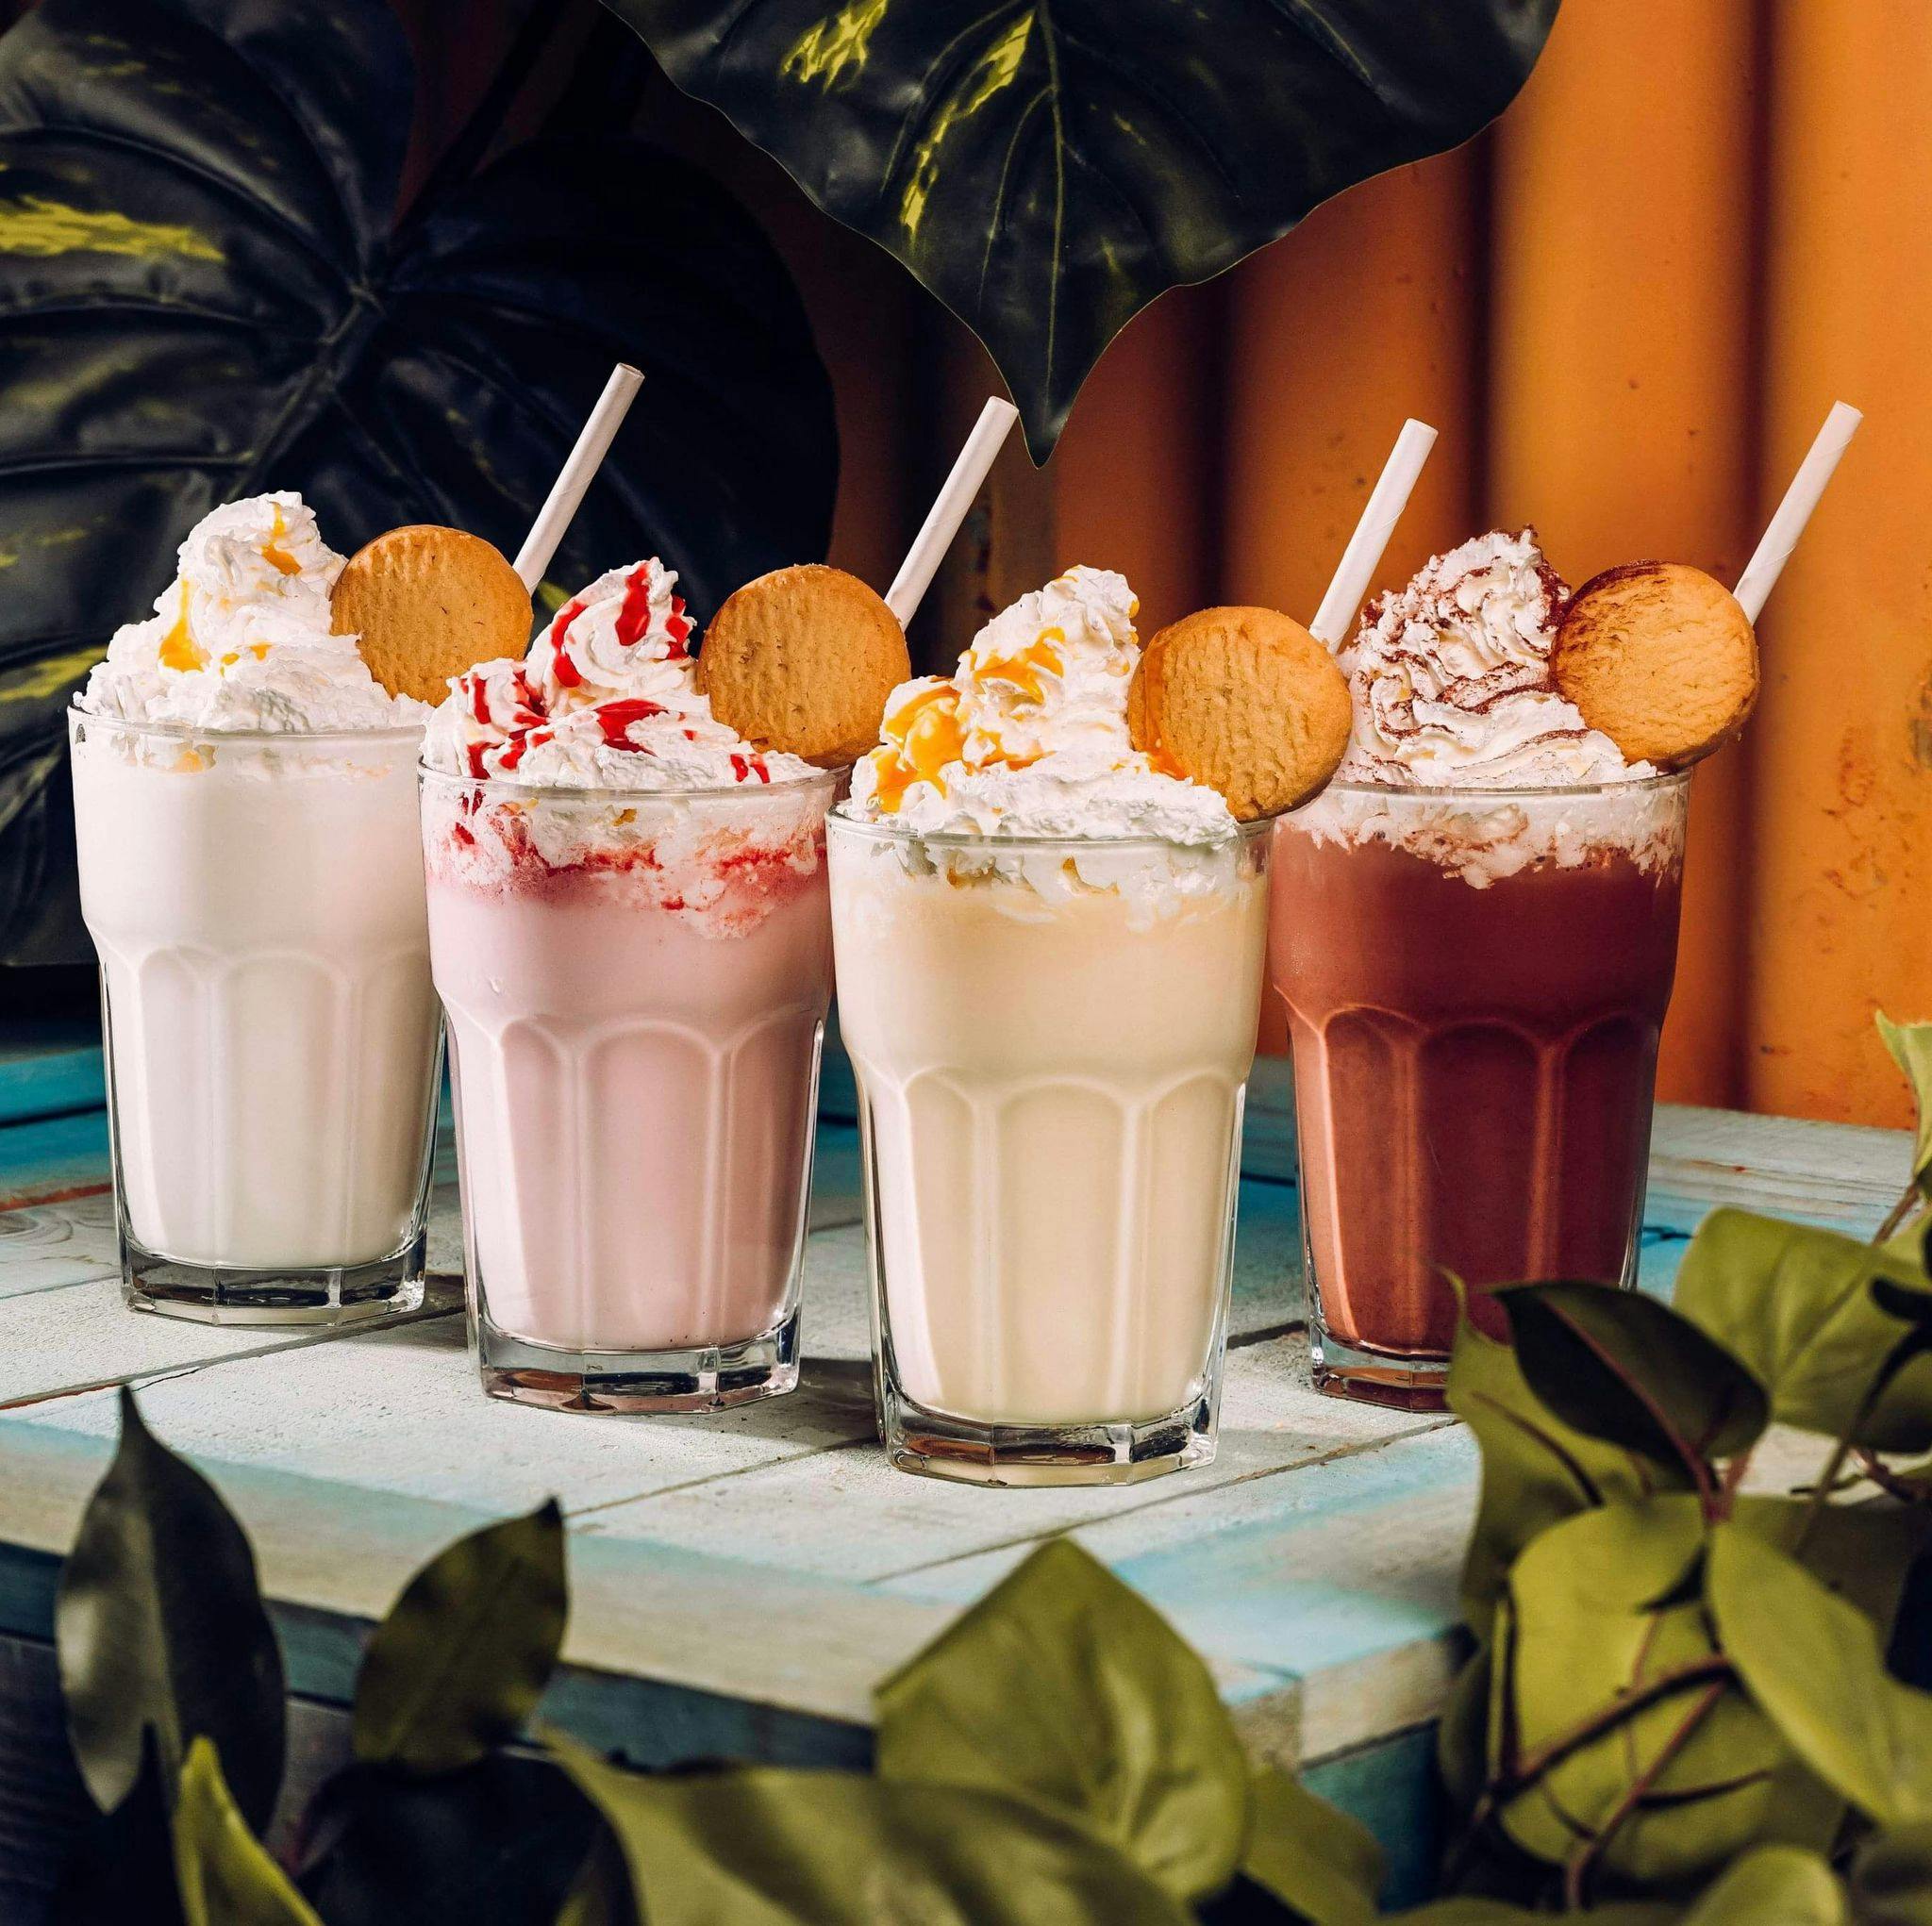 4 milkshakes lined up on a table.